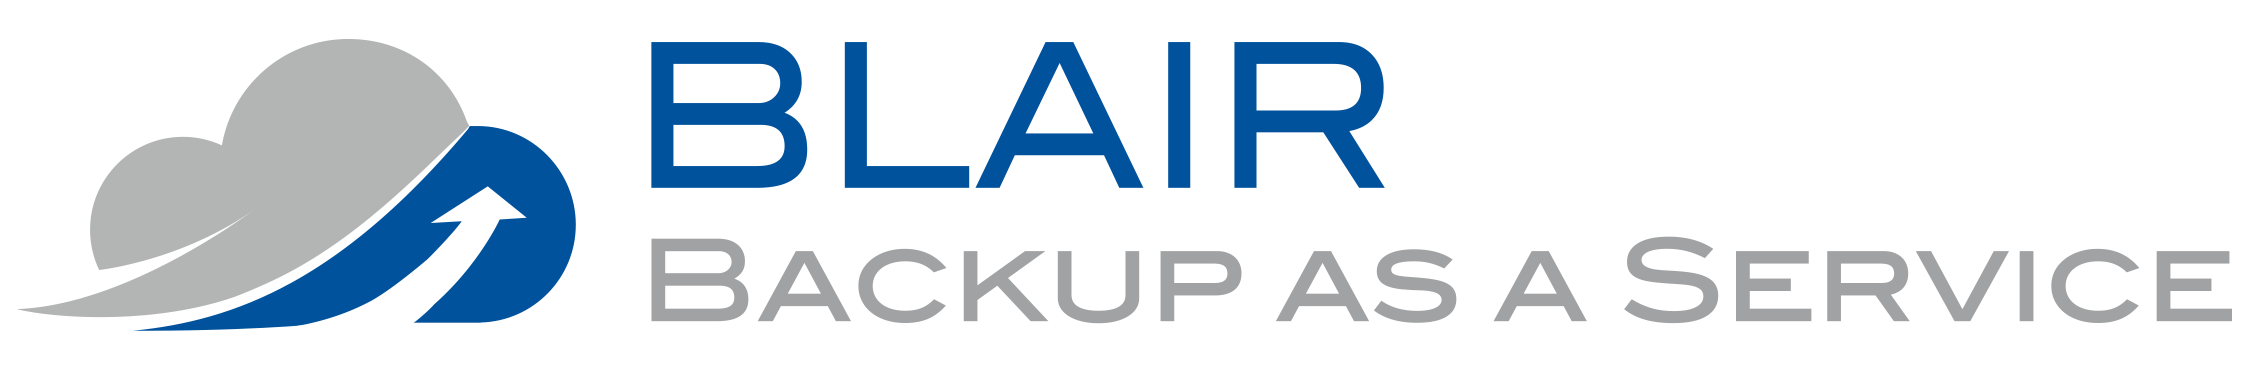 Blair Backup as a Service logo